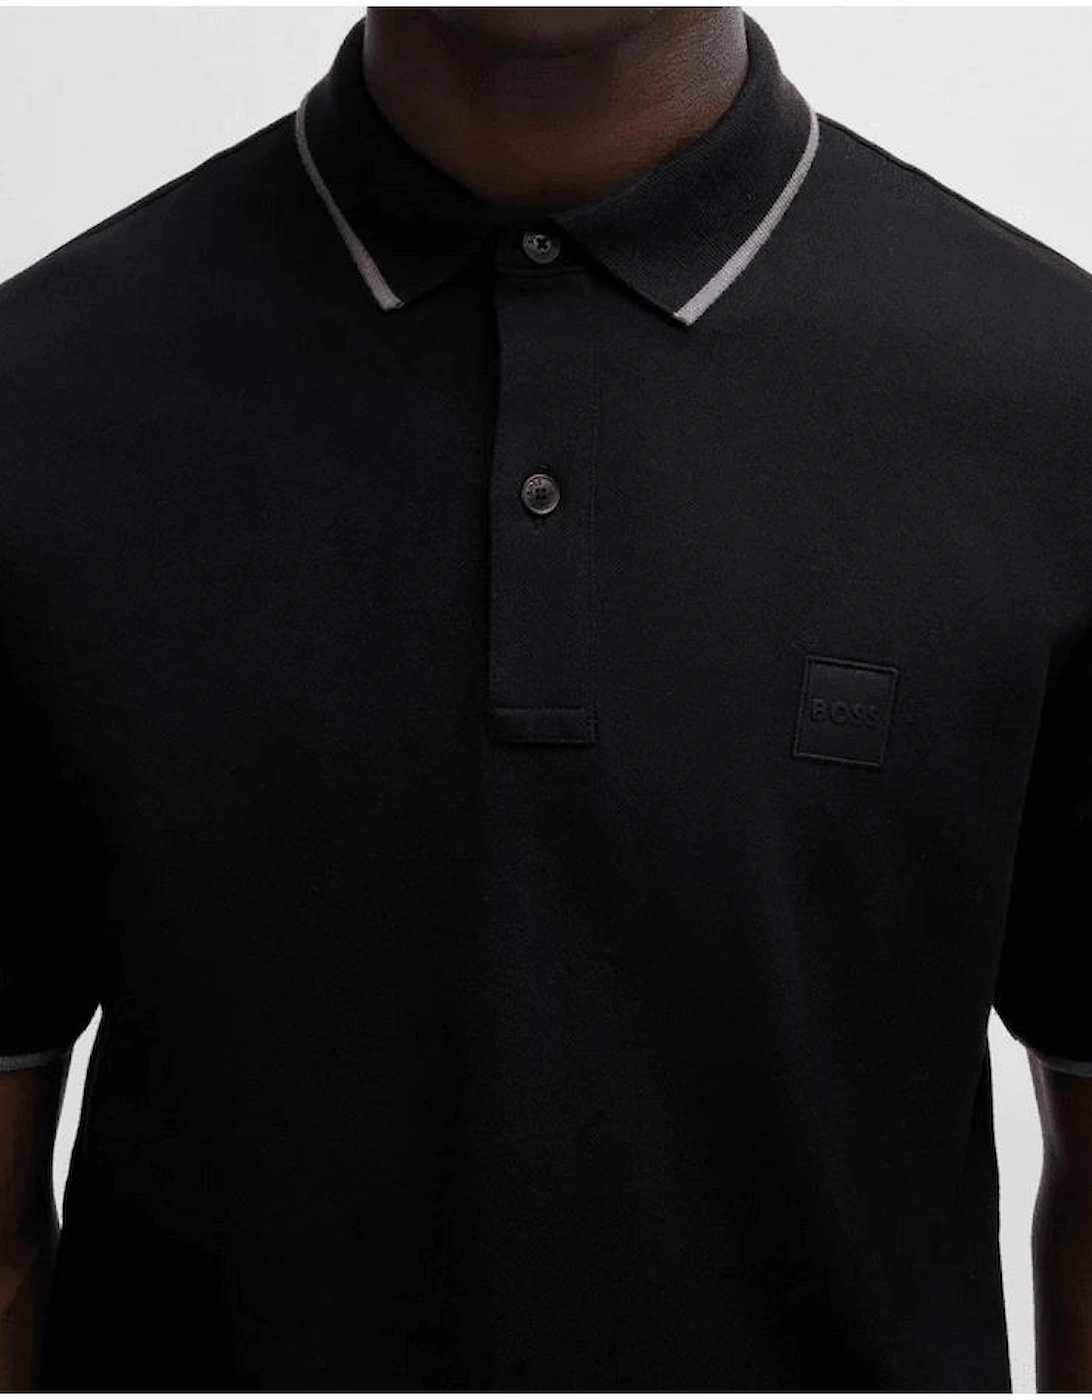 Passertip Slim Fit Black Polo Shirt